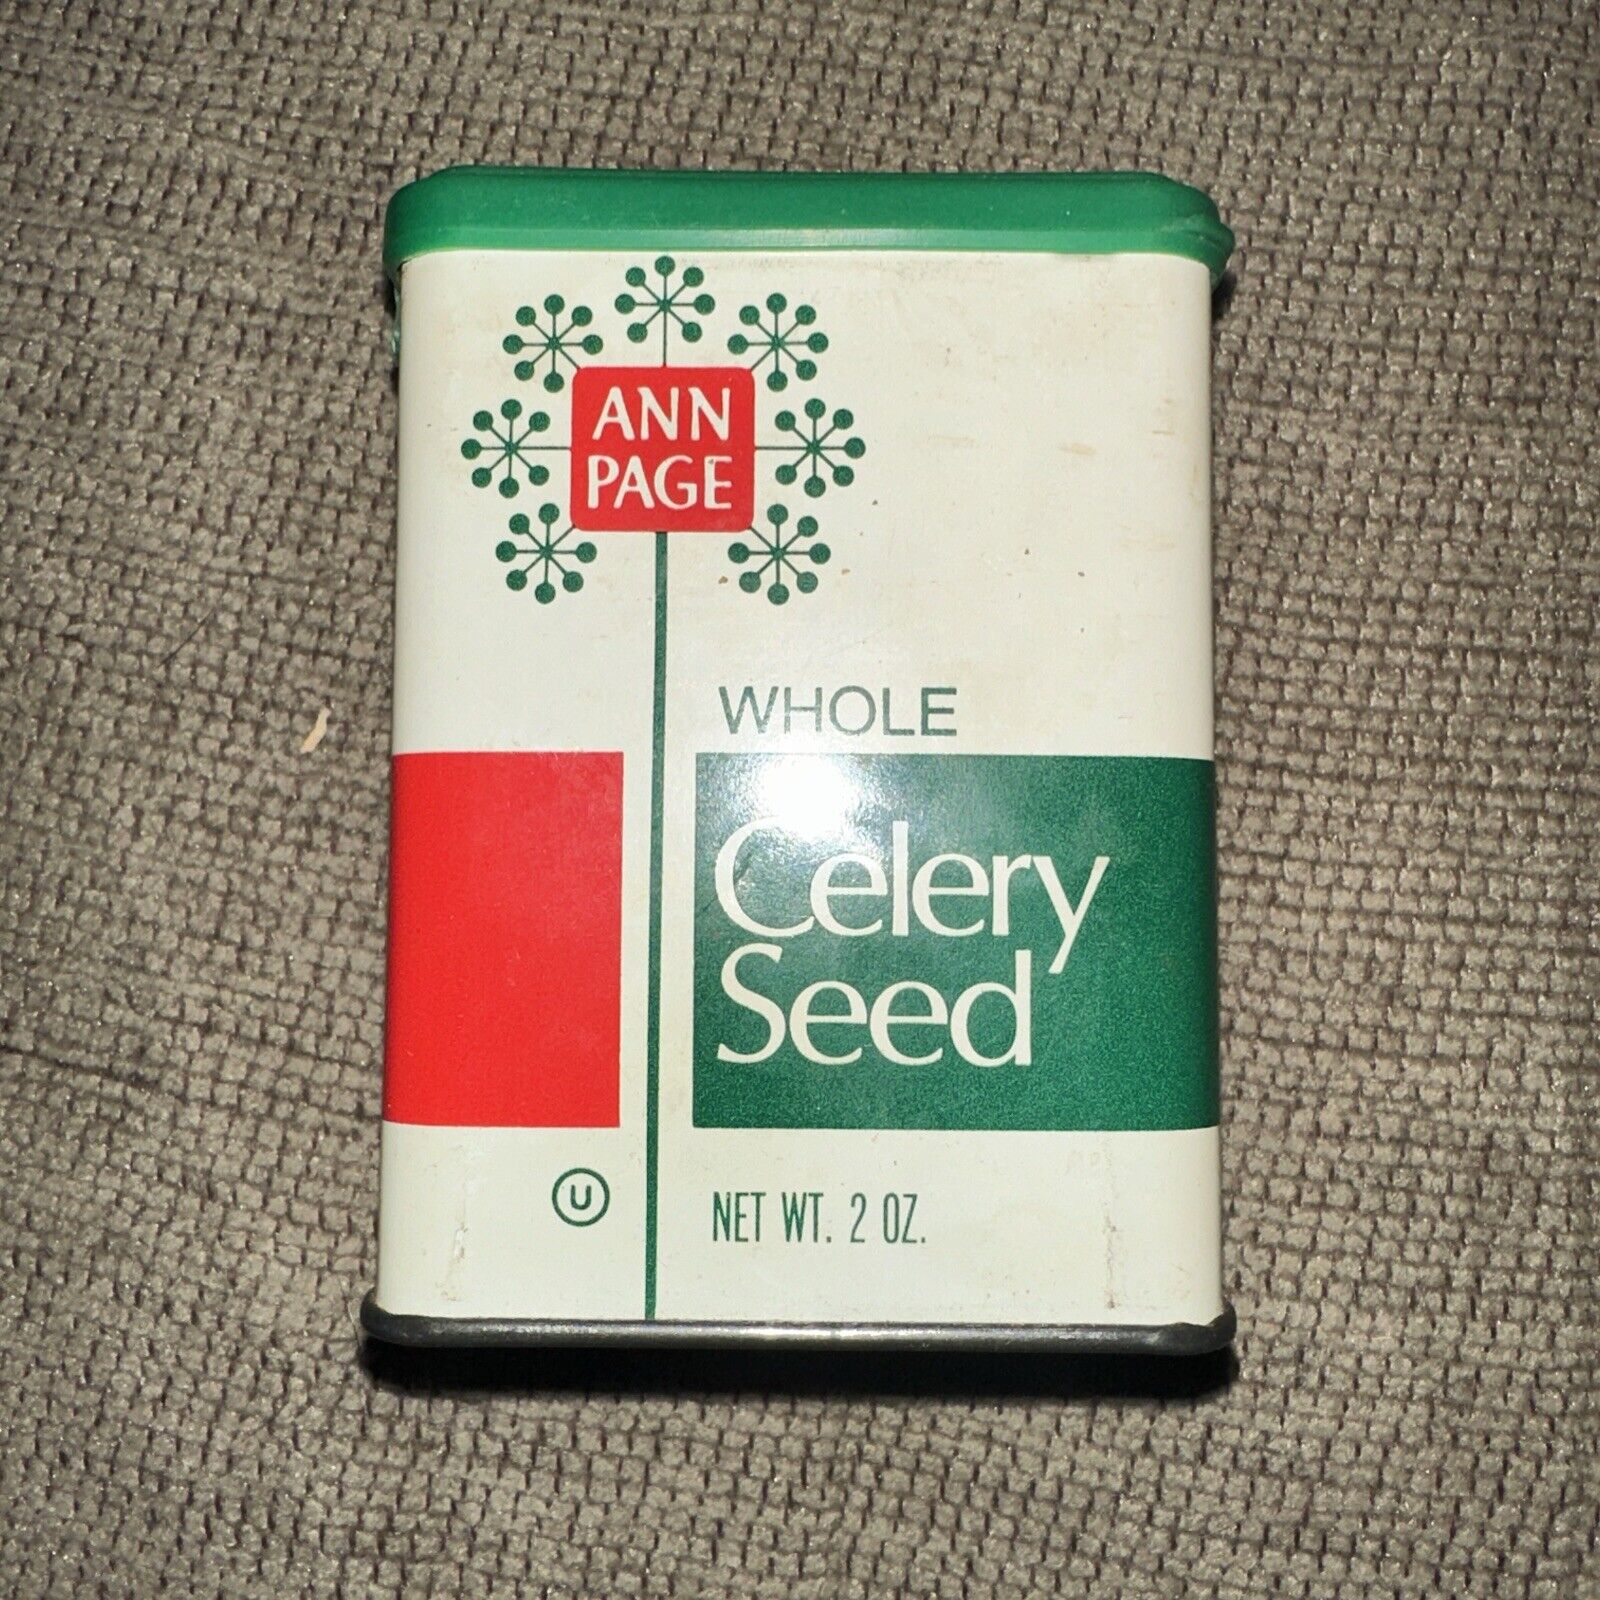 Vintage “Ann Page Whole Celery Seed Spice Tin” Original, Nice Graphic 2 Oz